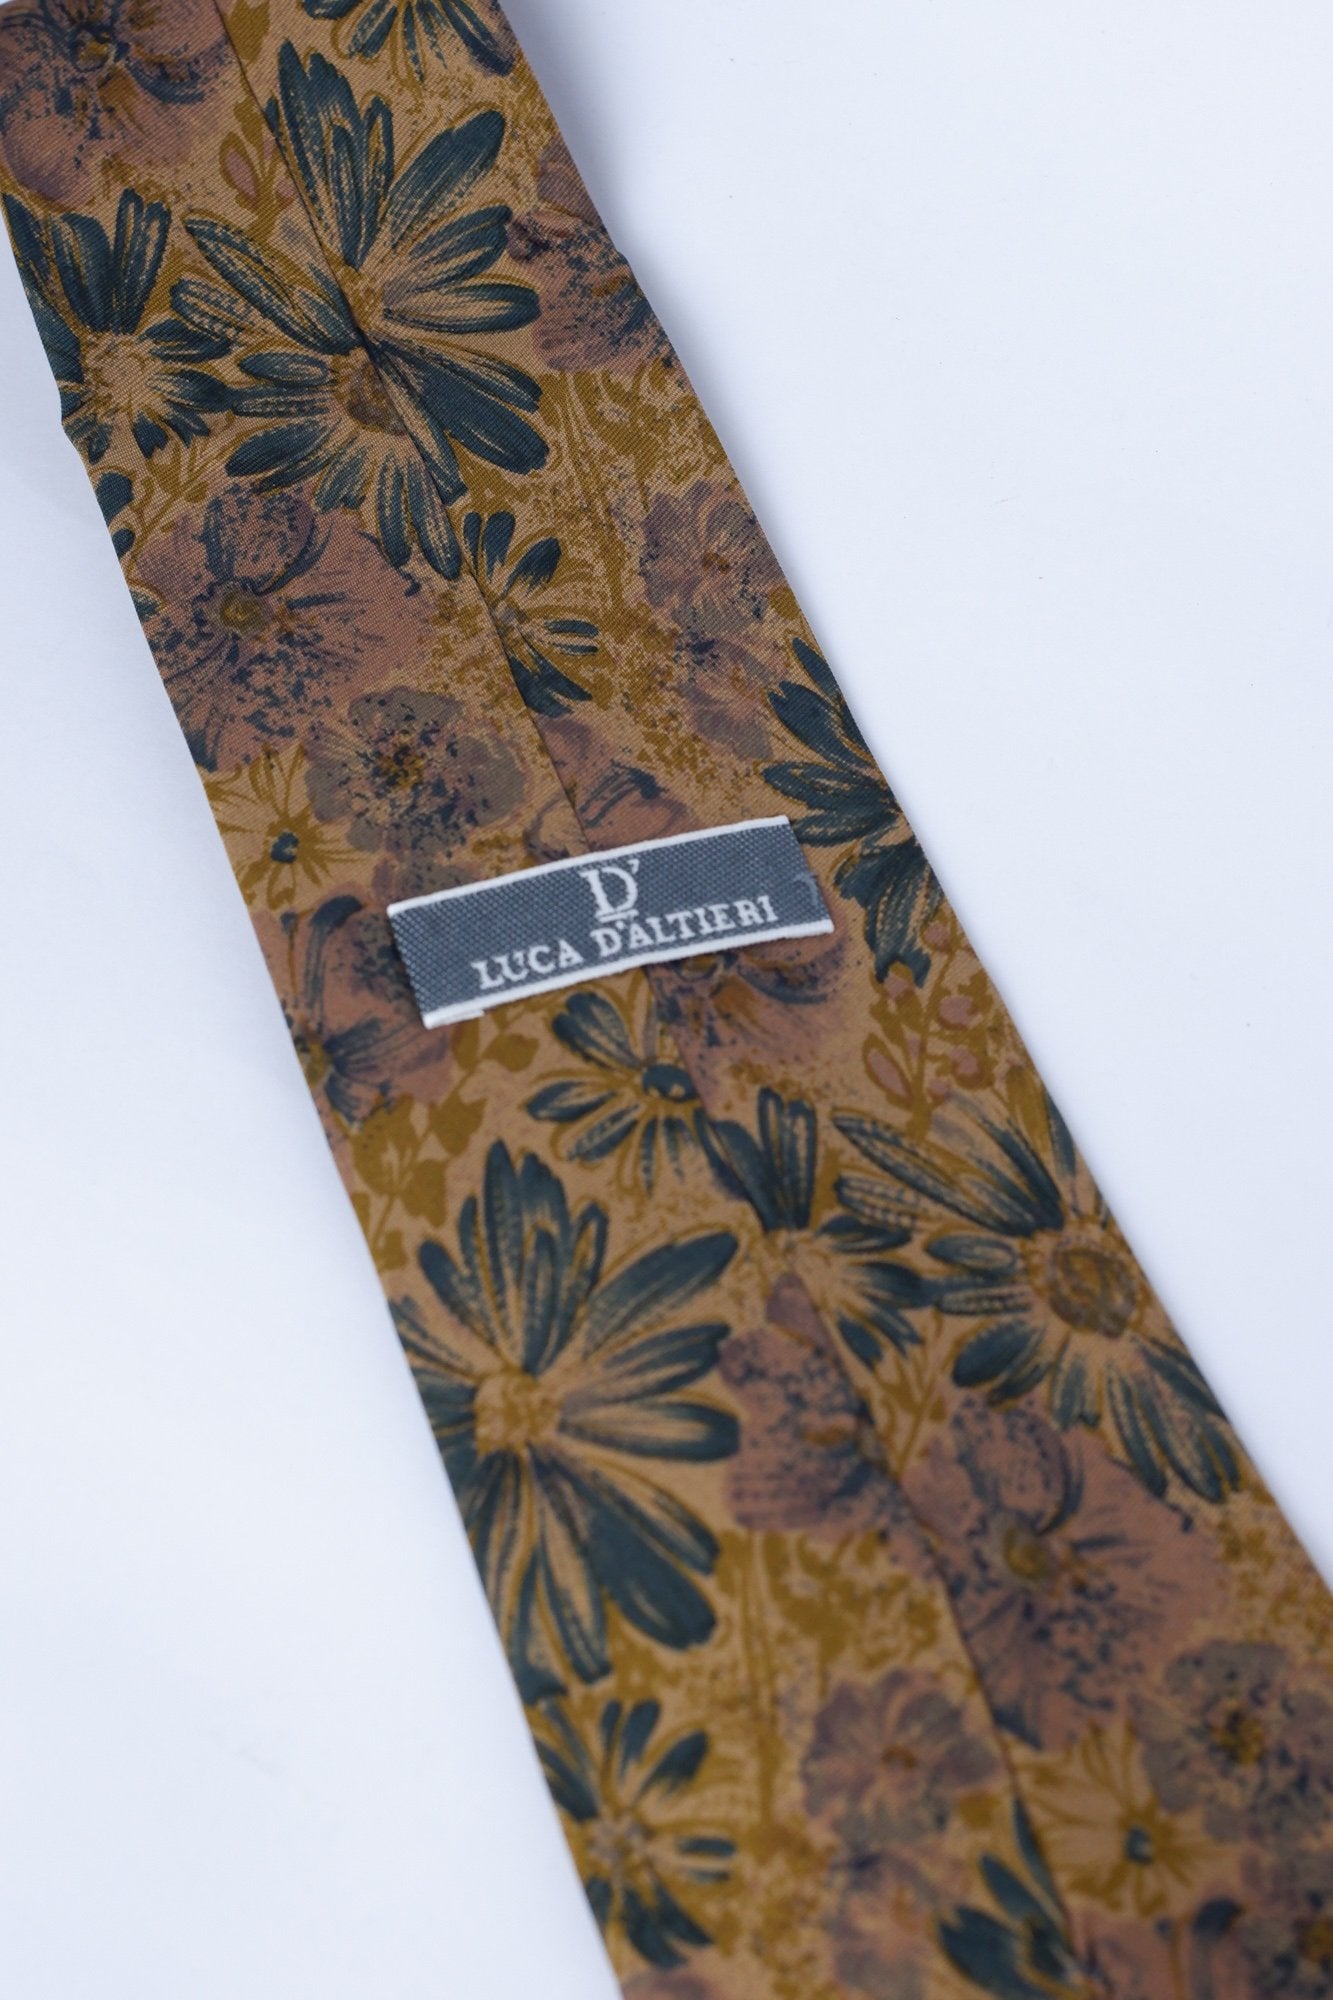 Luca D'Altieri Floral Printed Necktie